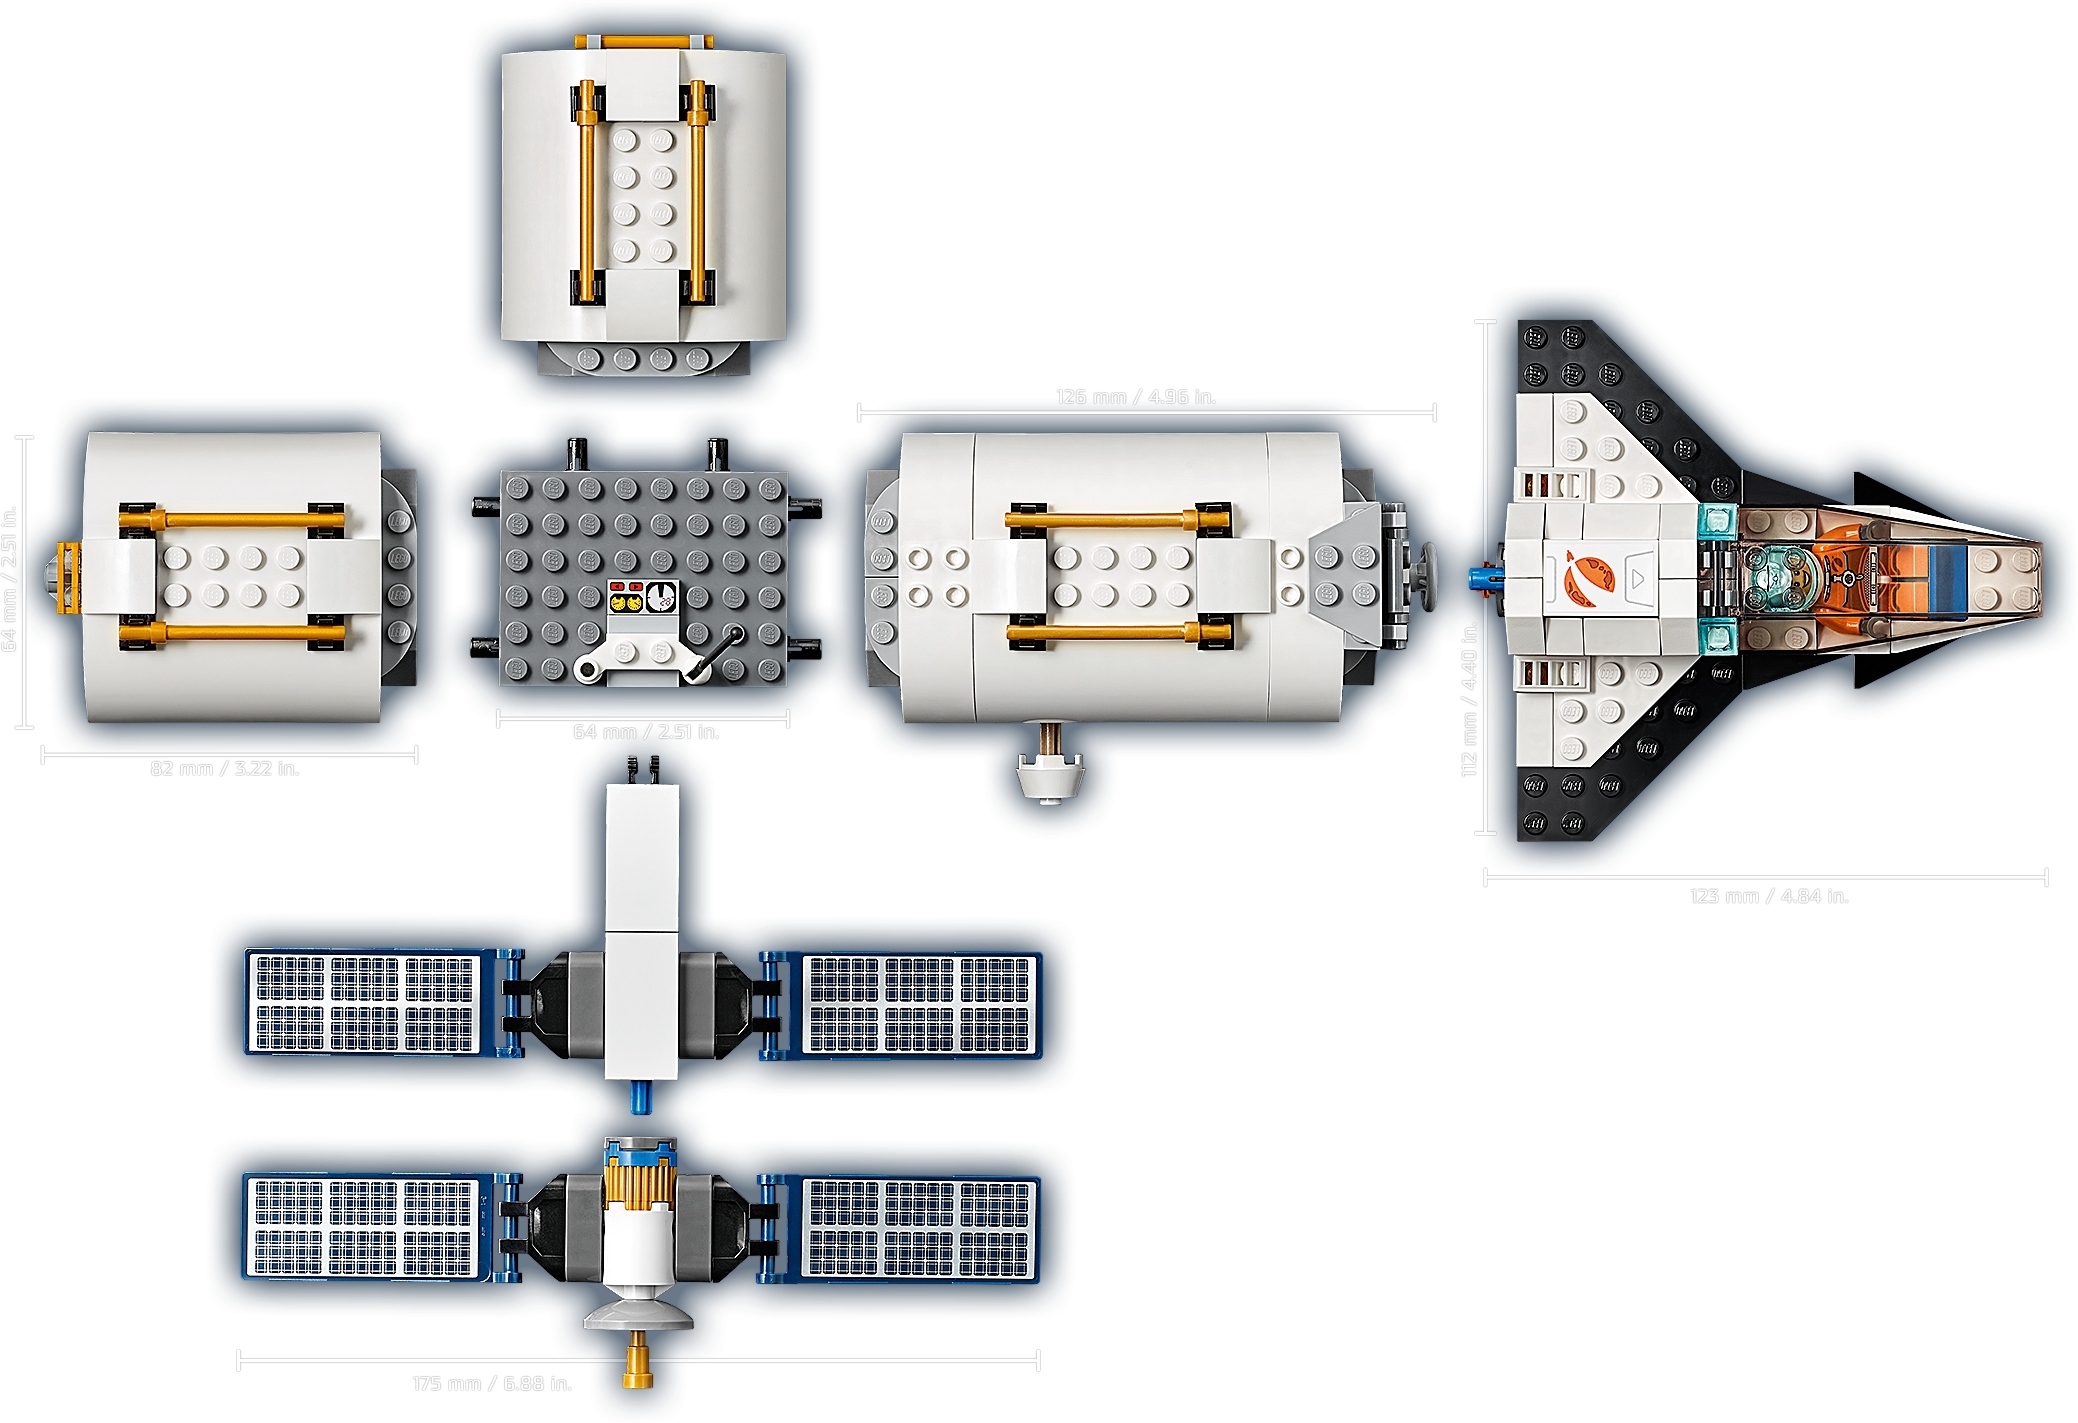 Space Station ISS 60227 Lego City Mond Raumstation DHL OVP NEU 